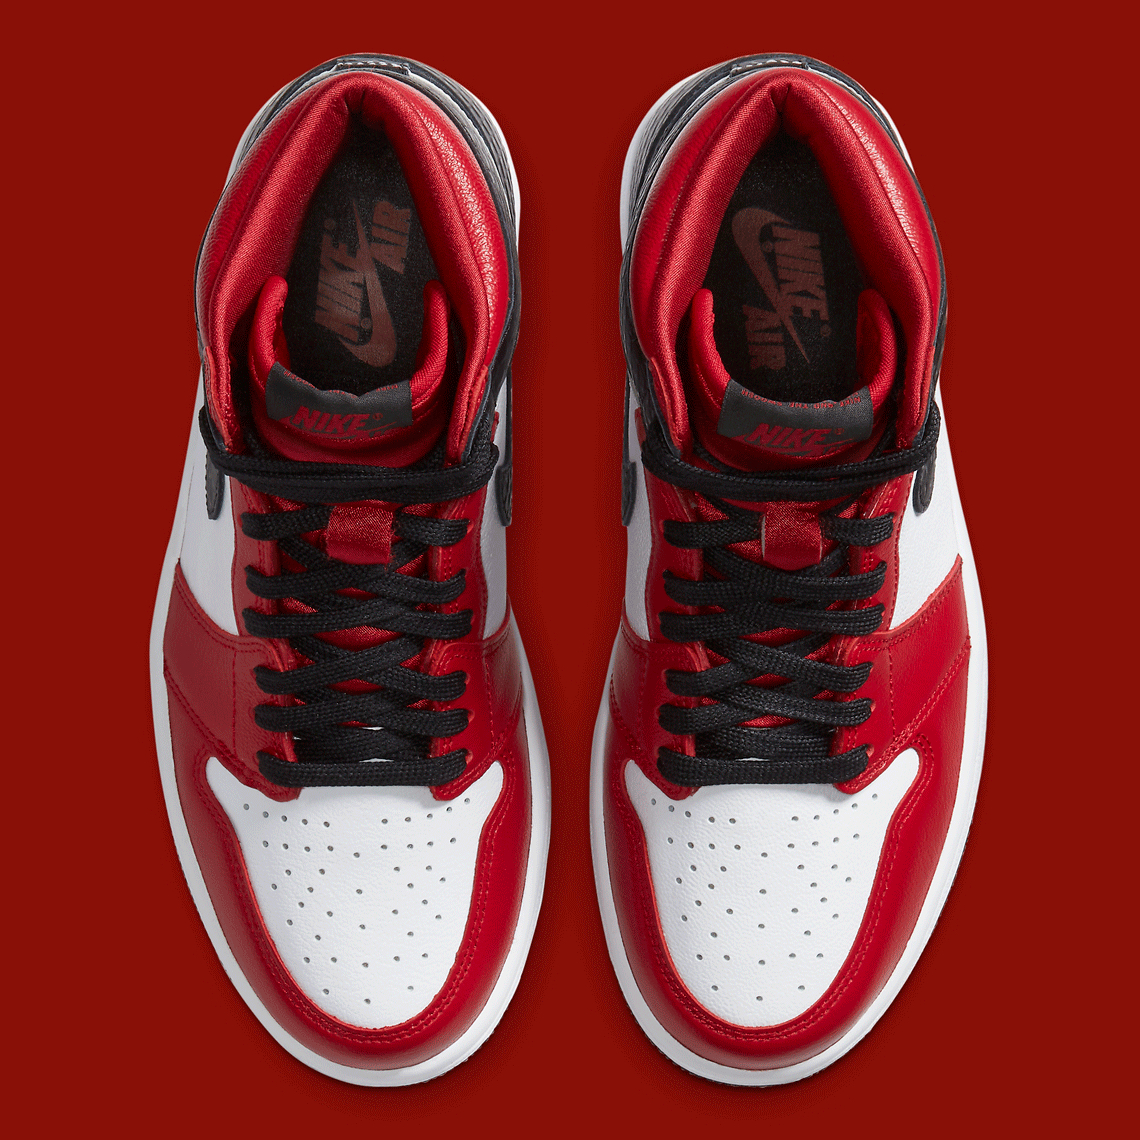 BabylinoShops | The Jordan Black Cat sneaker | Air Jordan 1 High